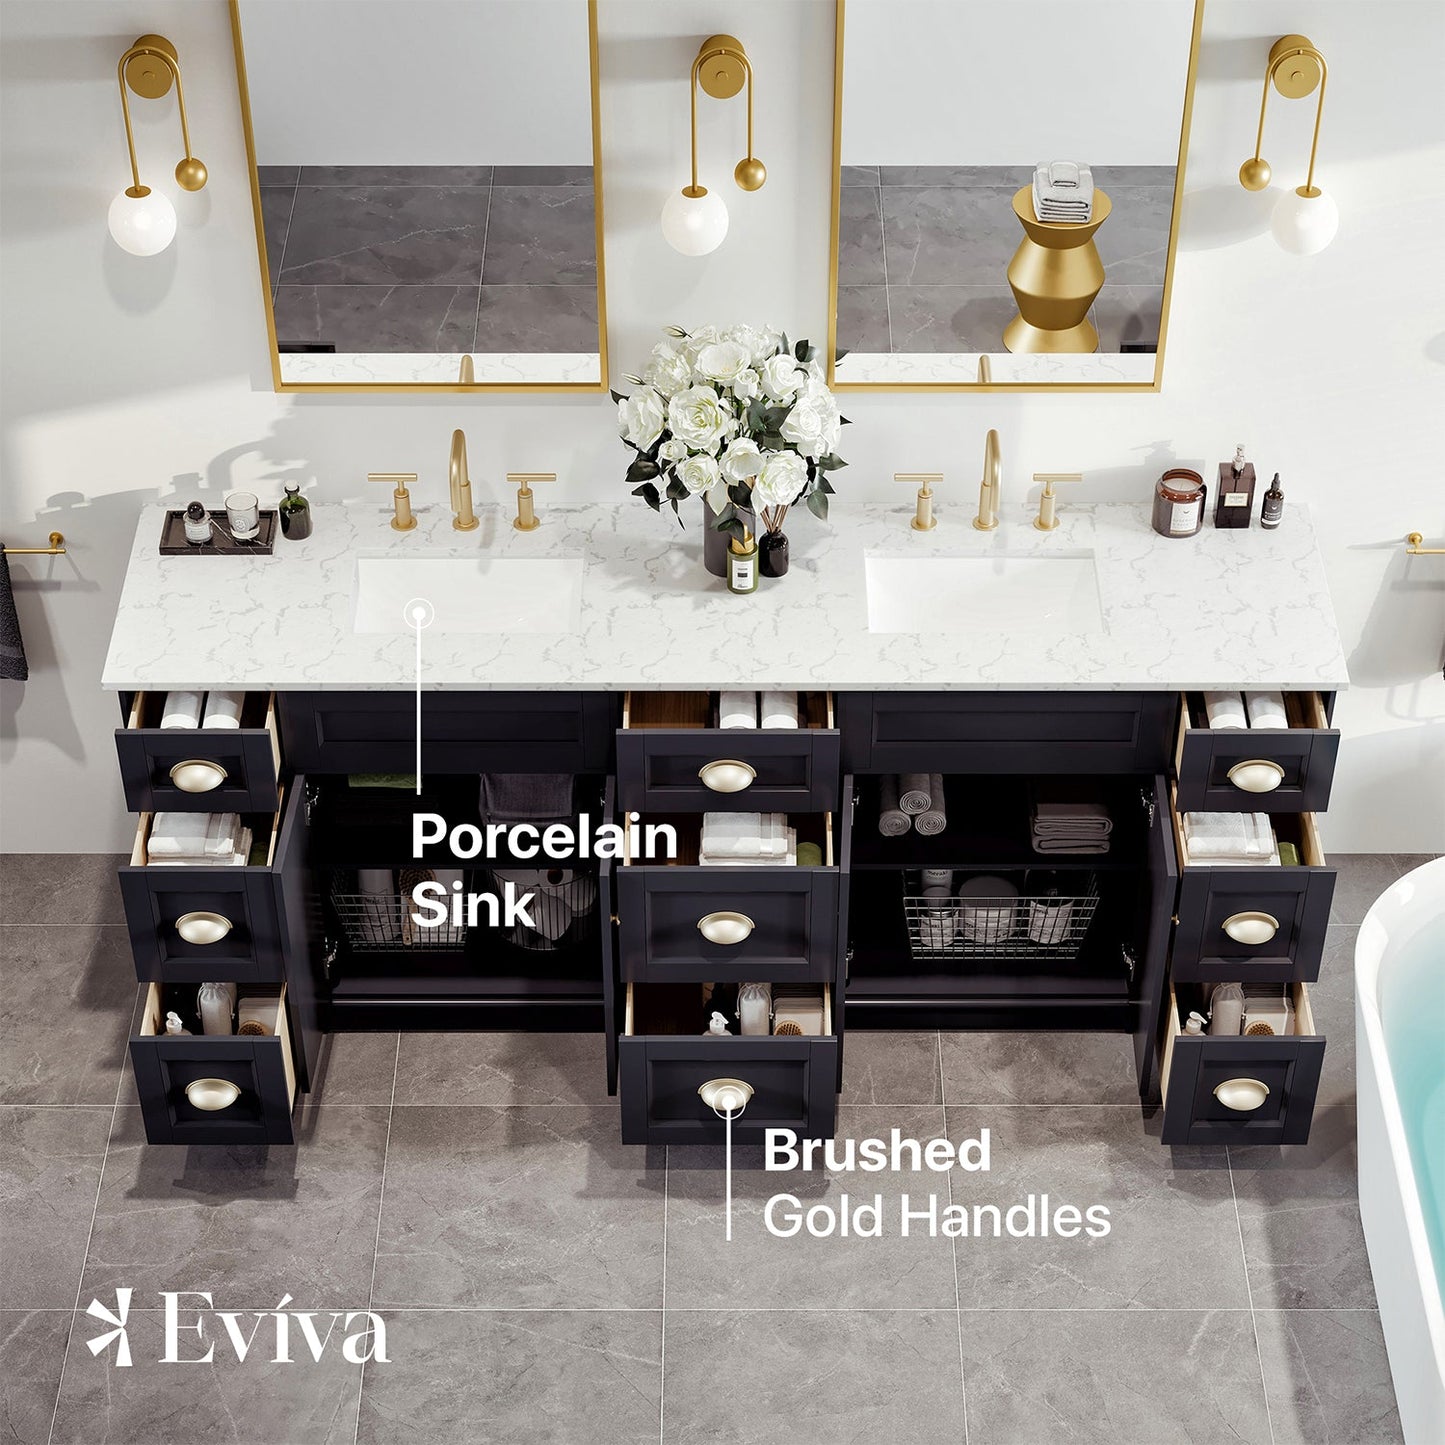 Epic 84"W x 22"D Charcoal Gray Double Sink Bathroom Vanity with Carrara Quartz Countertop and Undermount Porcelain Sink